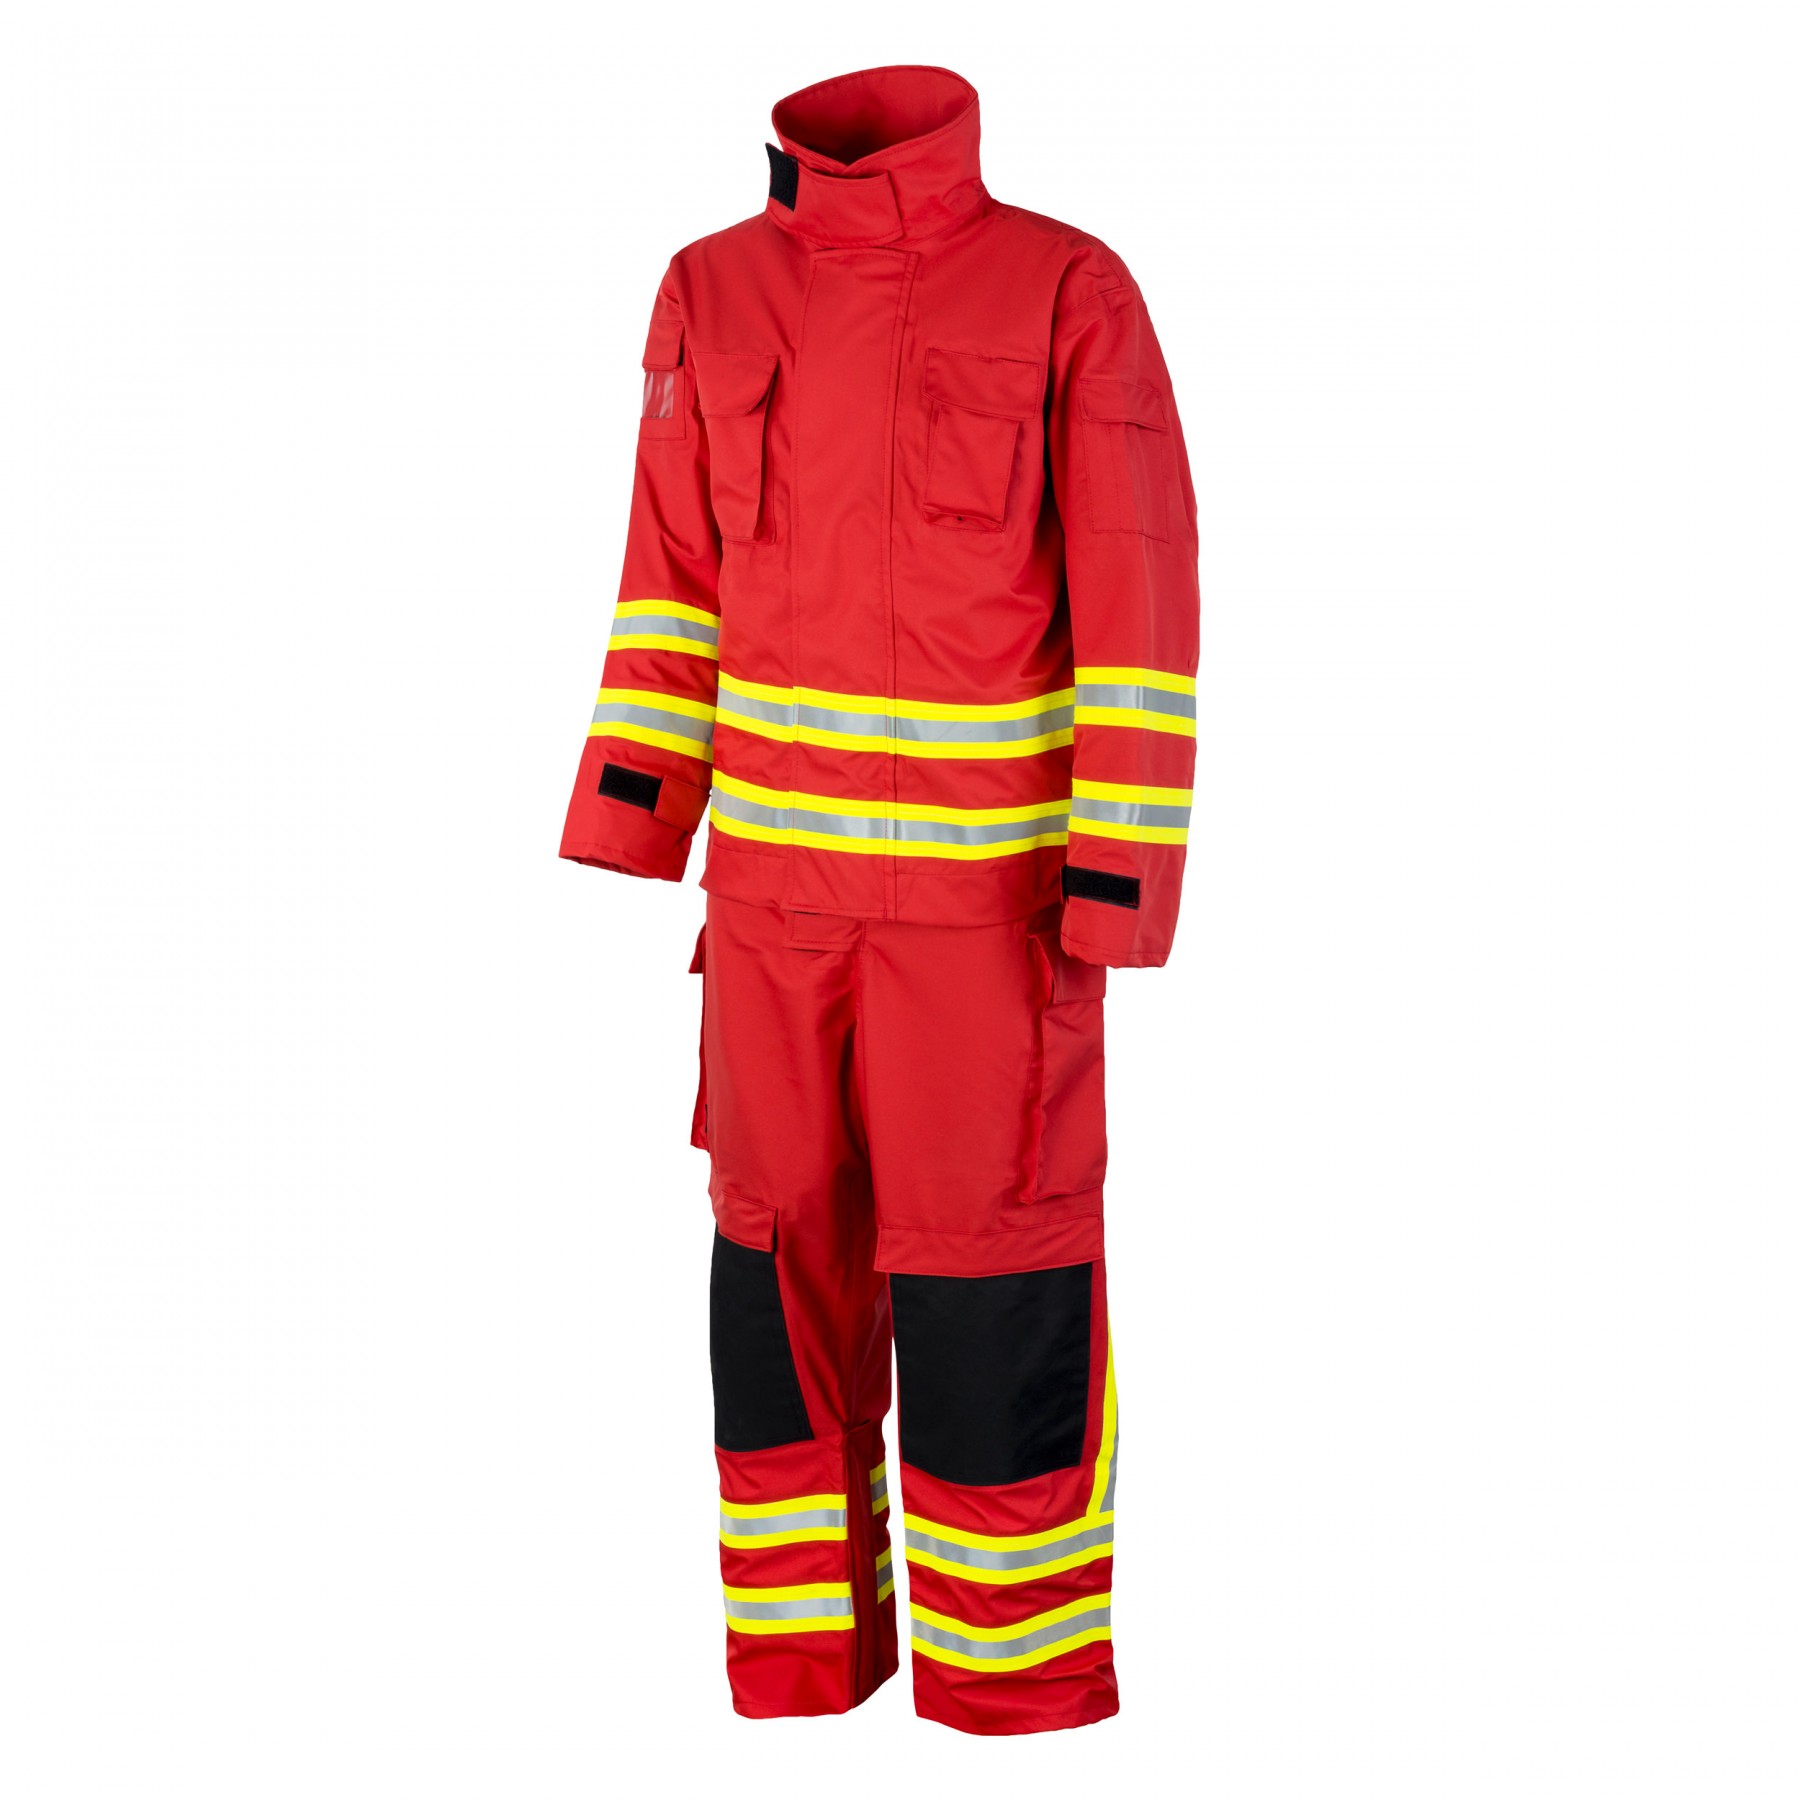 402/403 HVP Firefighter Suit